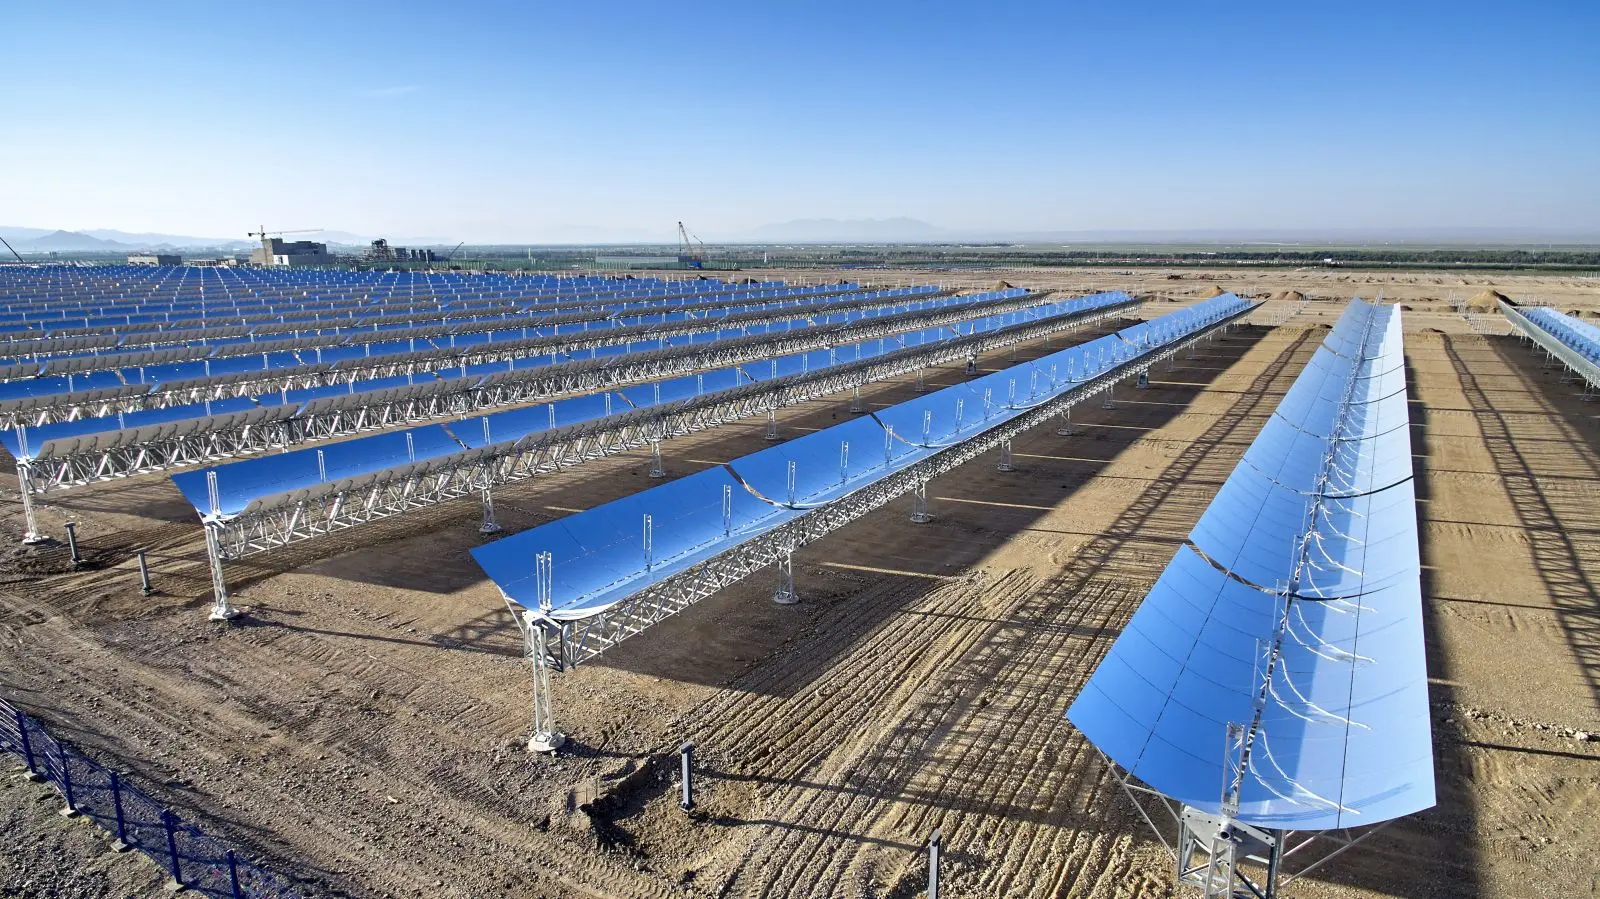 csp solar panels - What is CSP in solar power